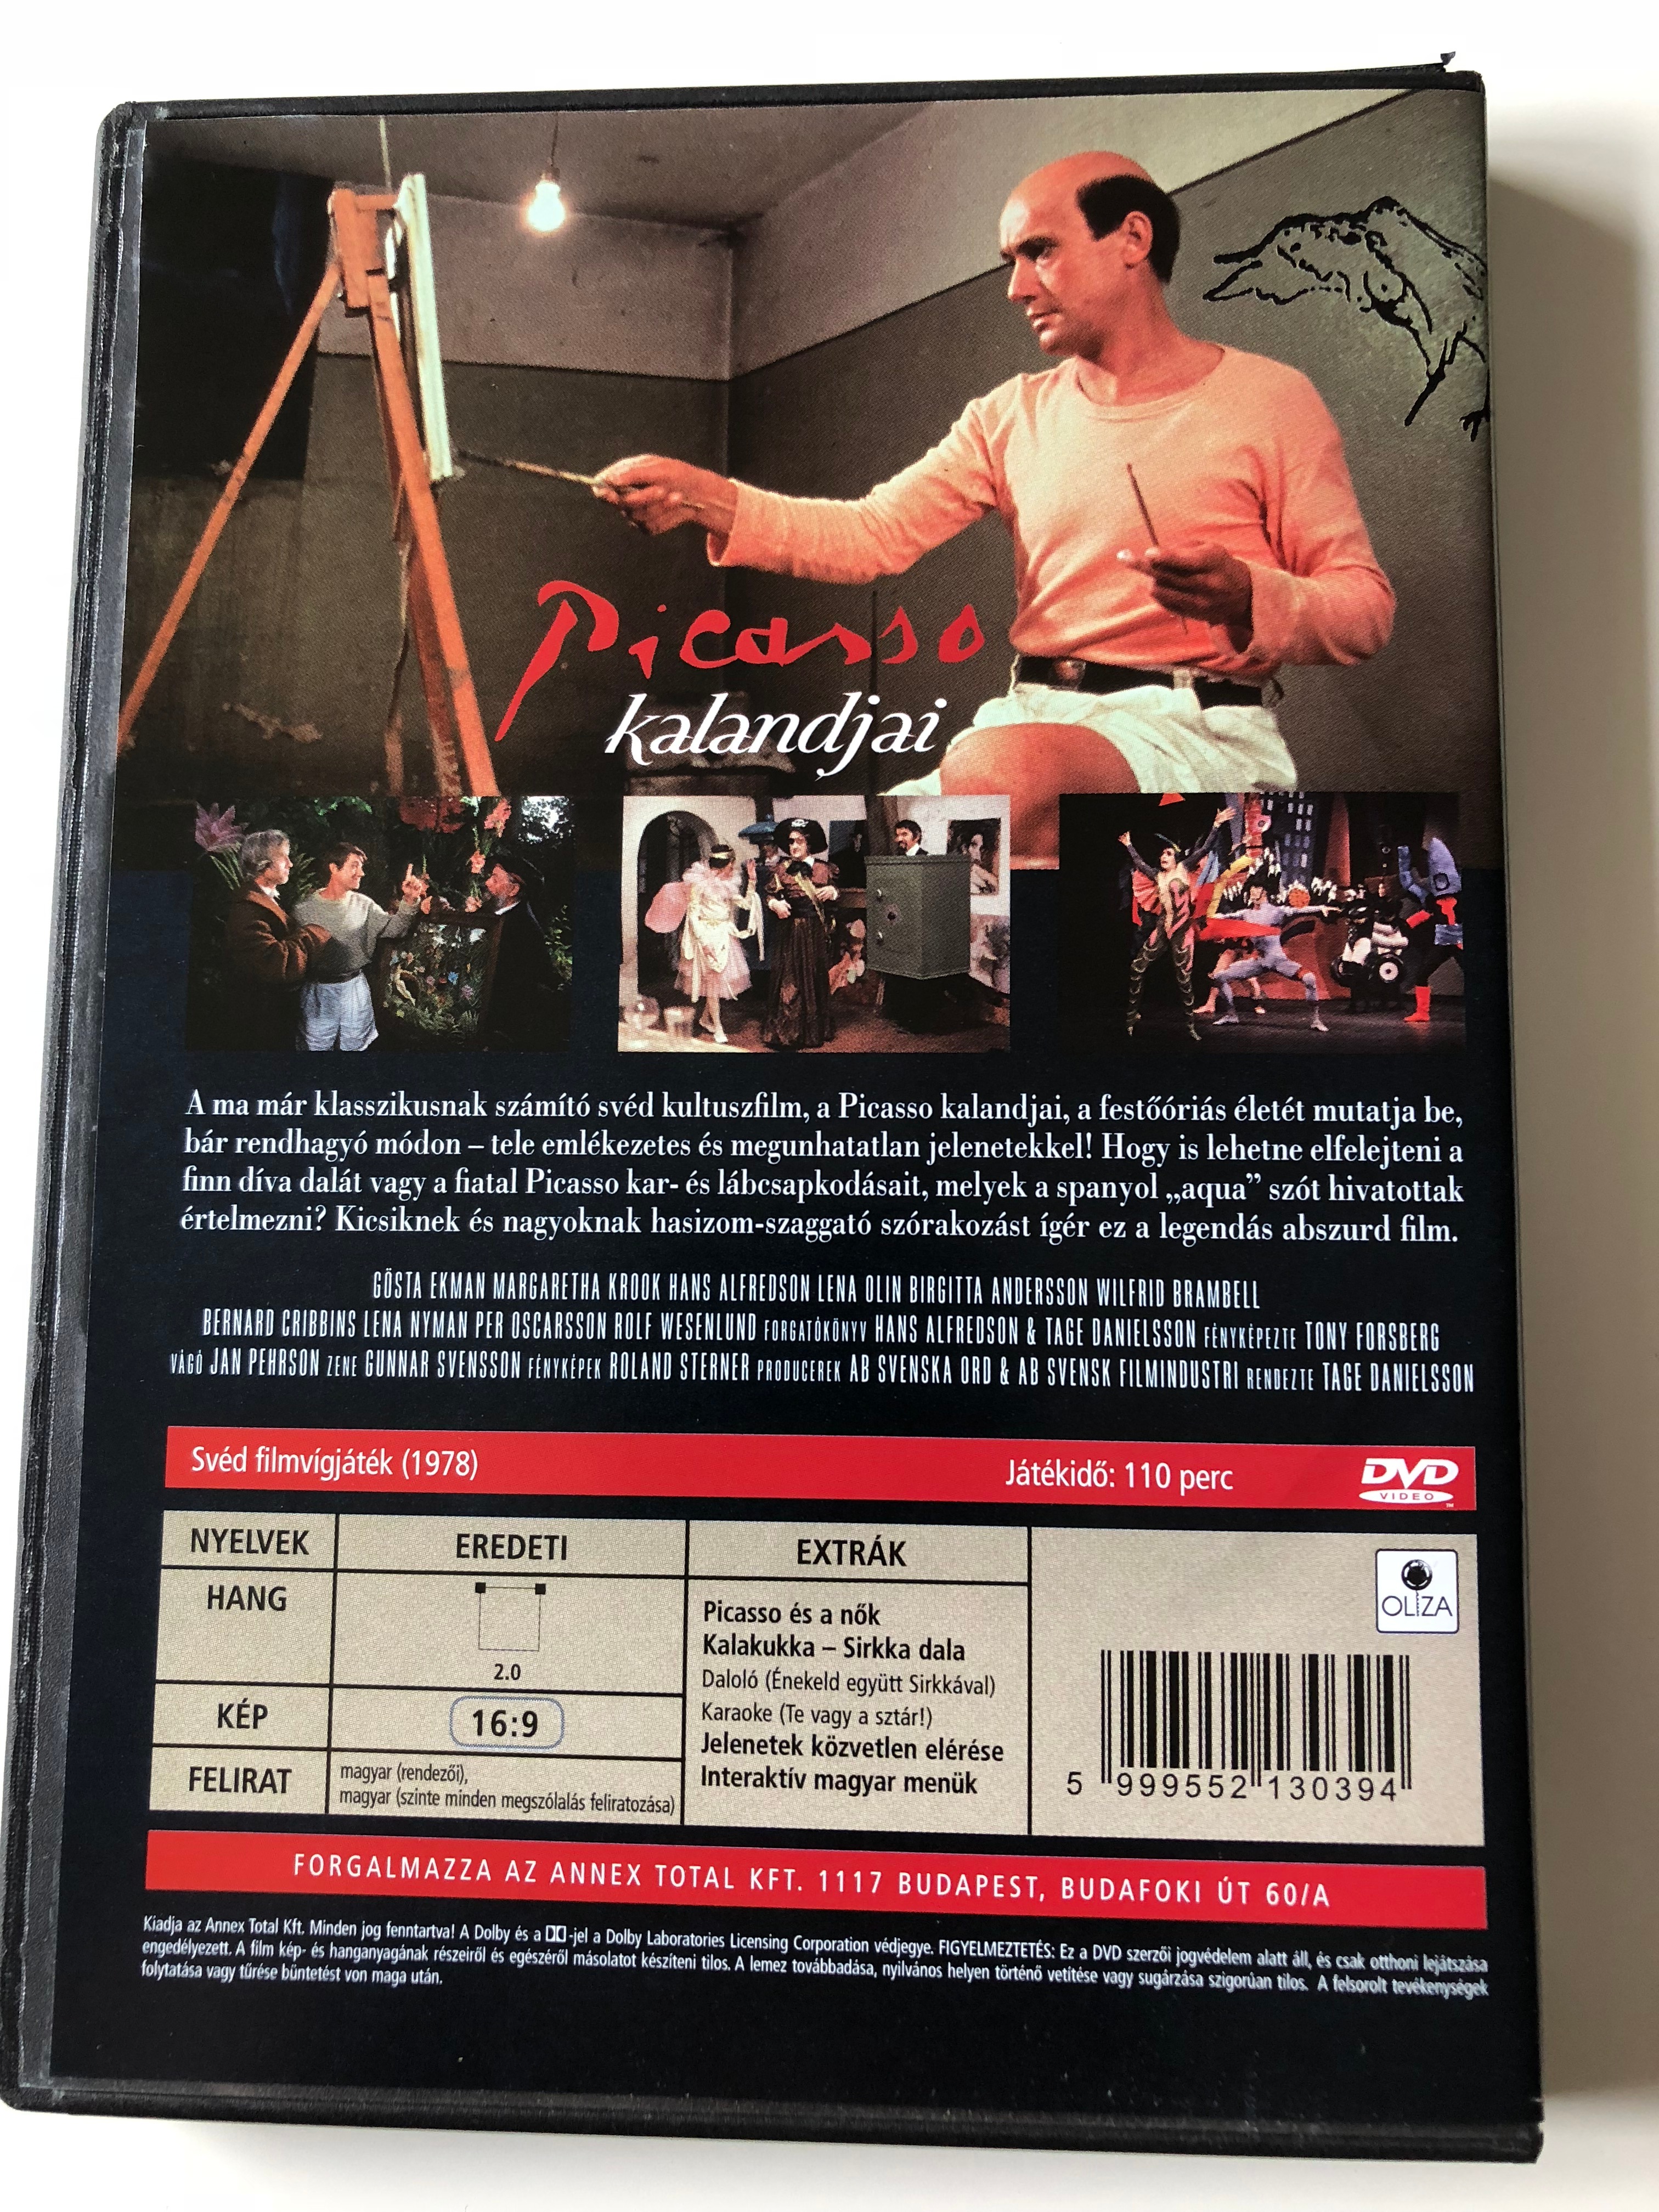 Adventures of Picasso DVD 1978 Picasso kalandjai (Picassos äventyr) /  Directed by Tage Danielsson / Starring: Gösta Ekman, Hans Alfredson,  Margaretha Krook - bibleinmylanguage